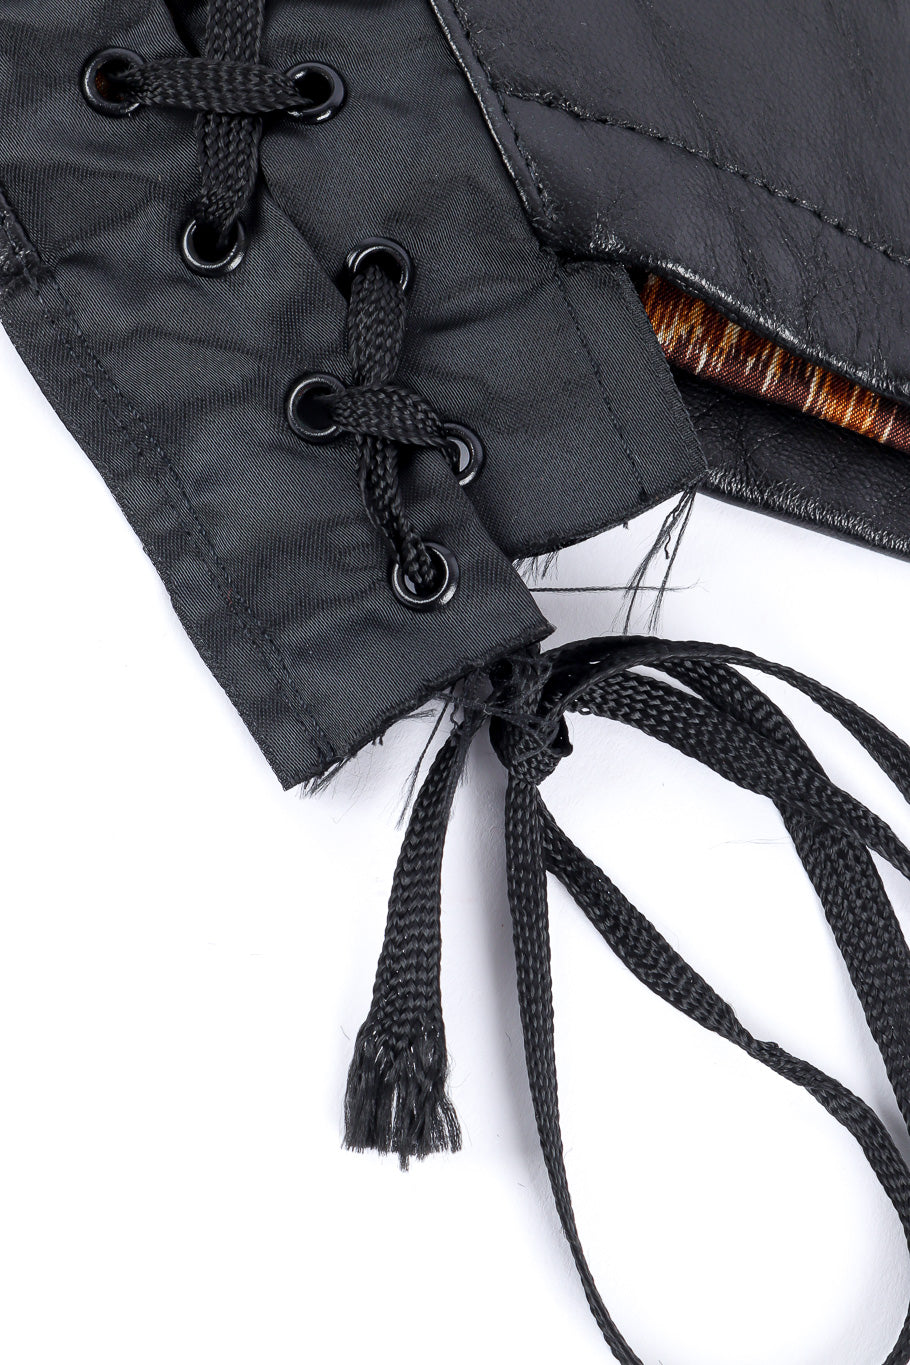 Dolce & Gabbana leather panther jacket unraveling lace detail @recessla